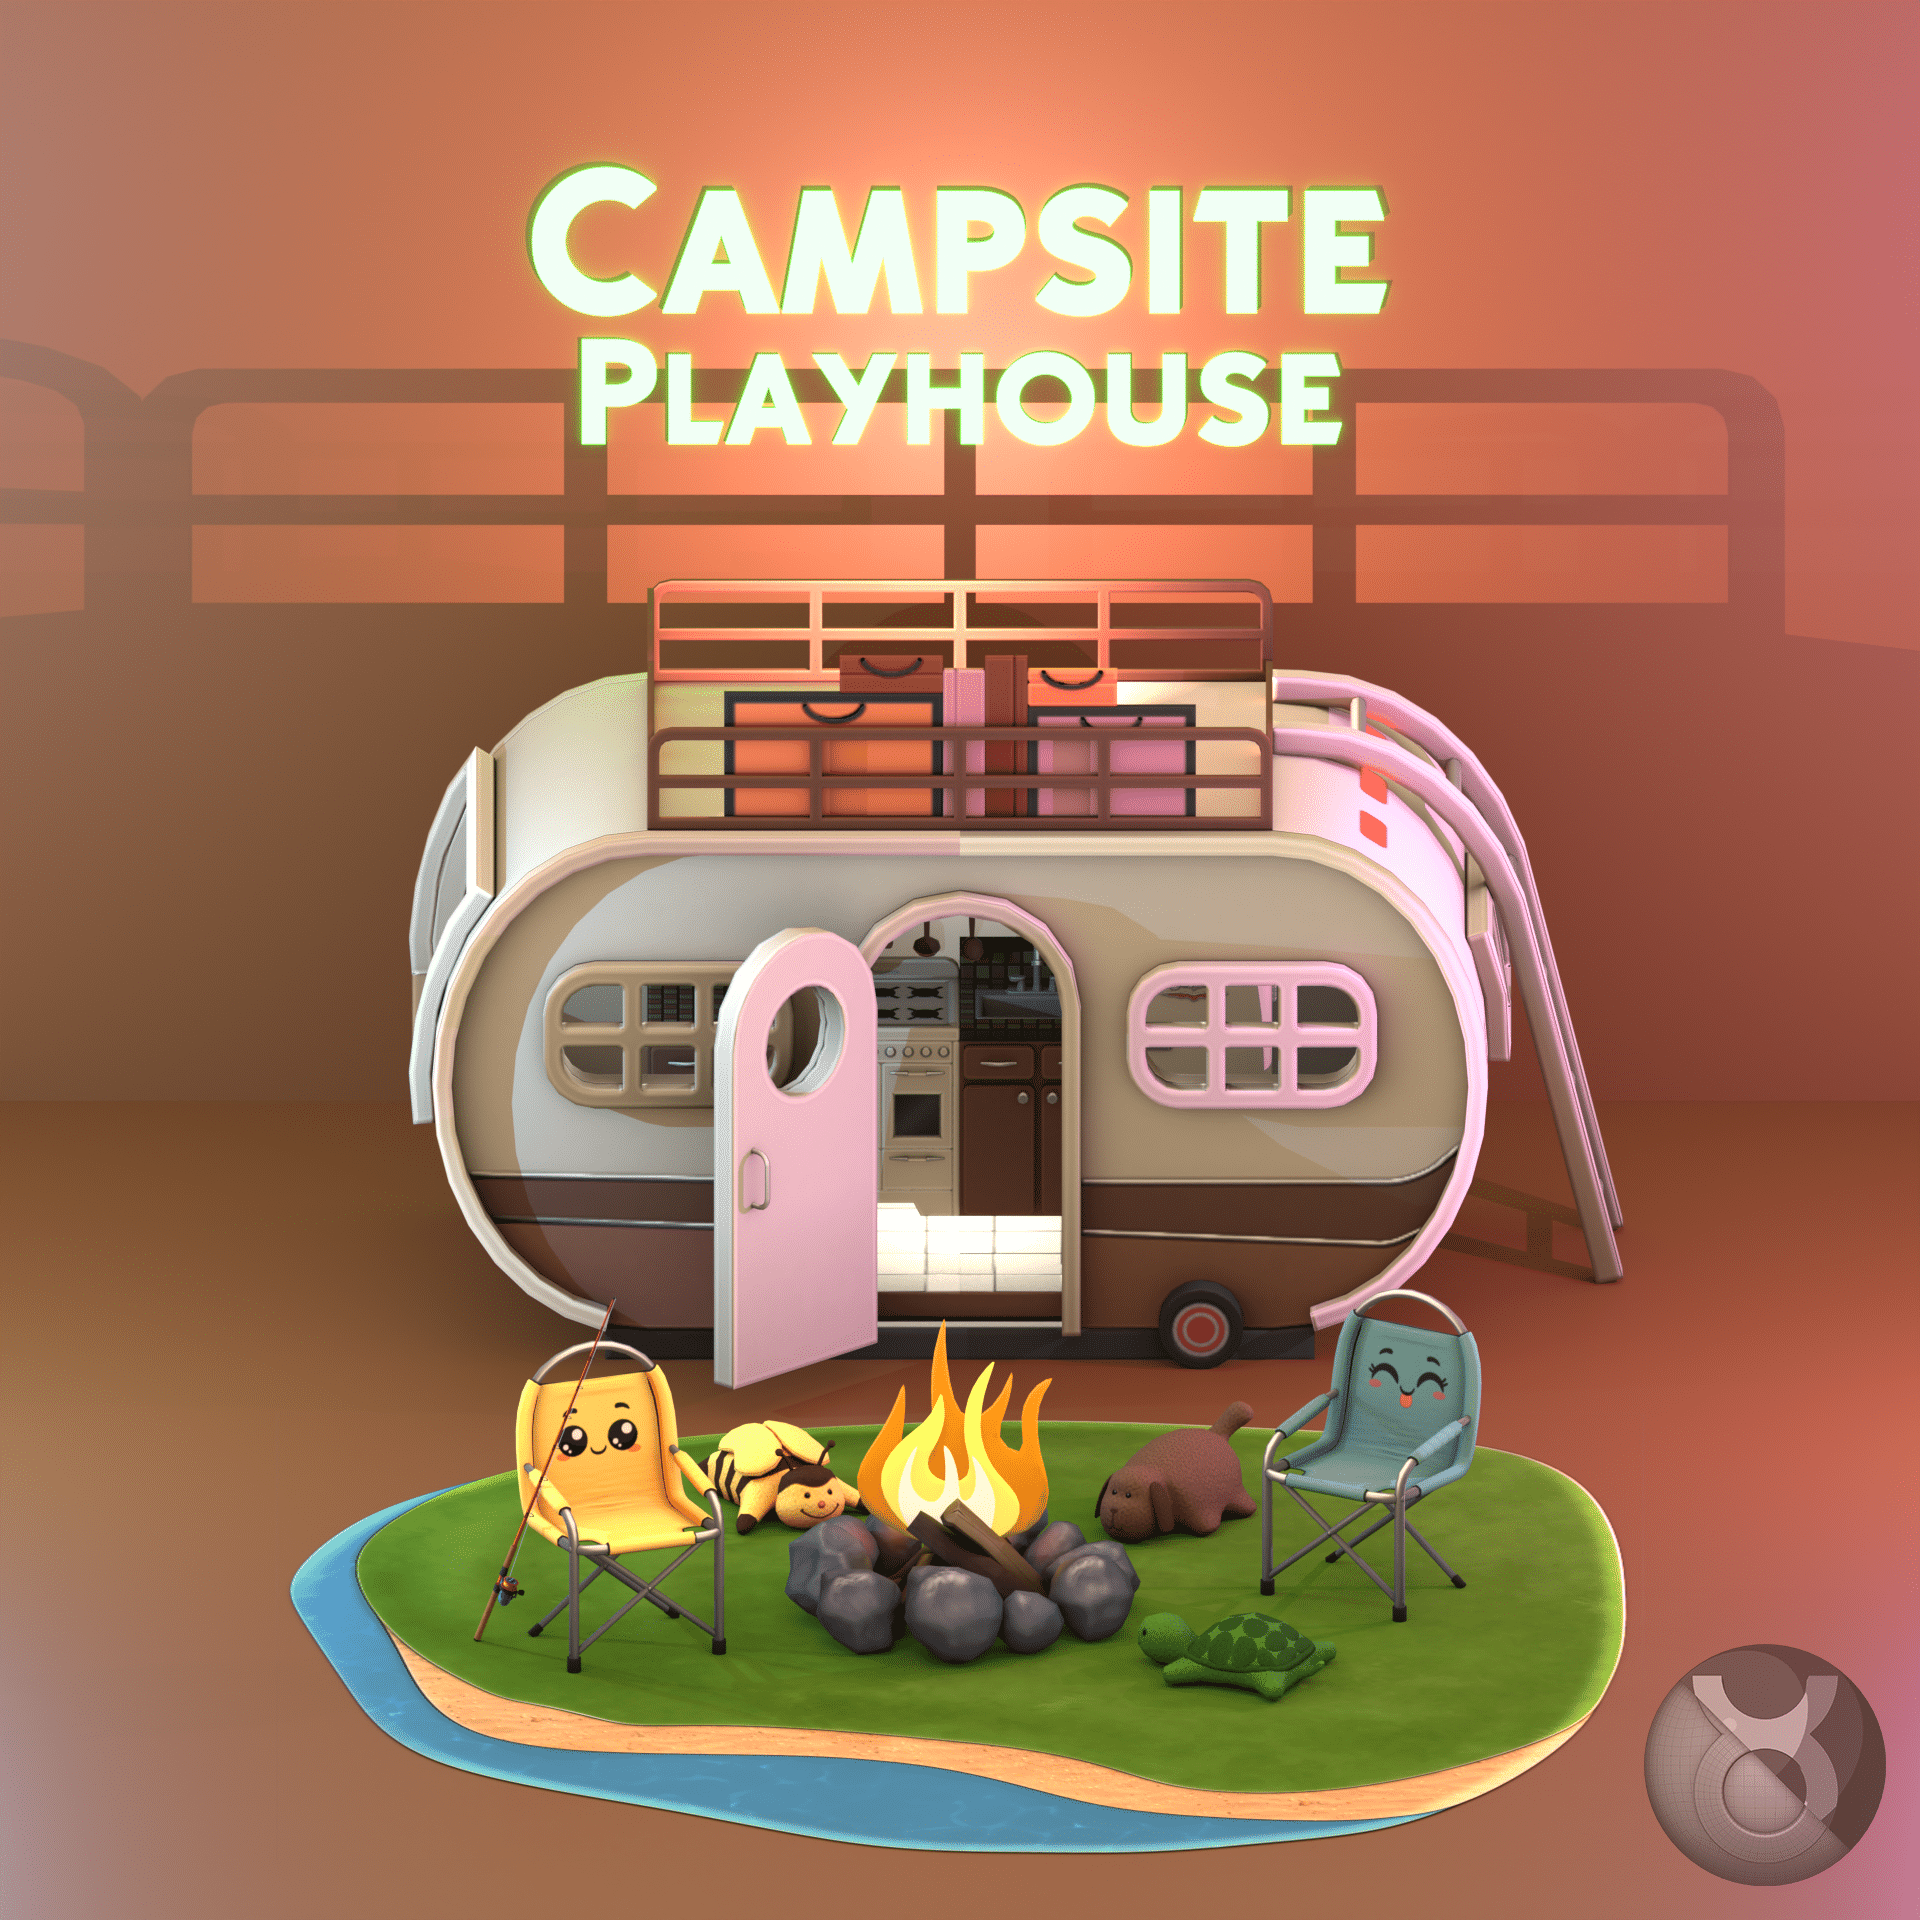 Campsite Playhouse